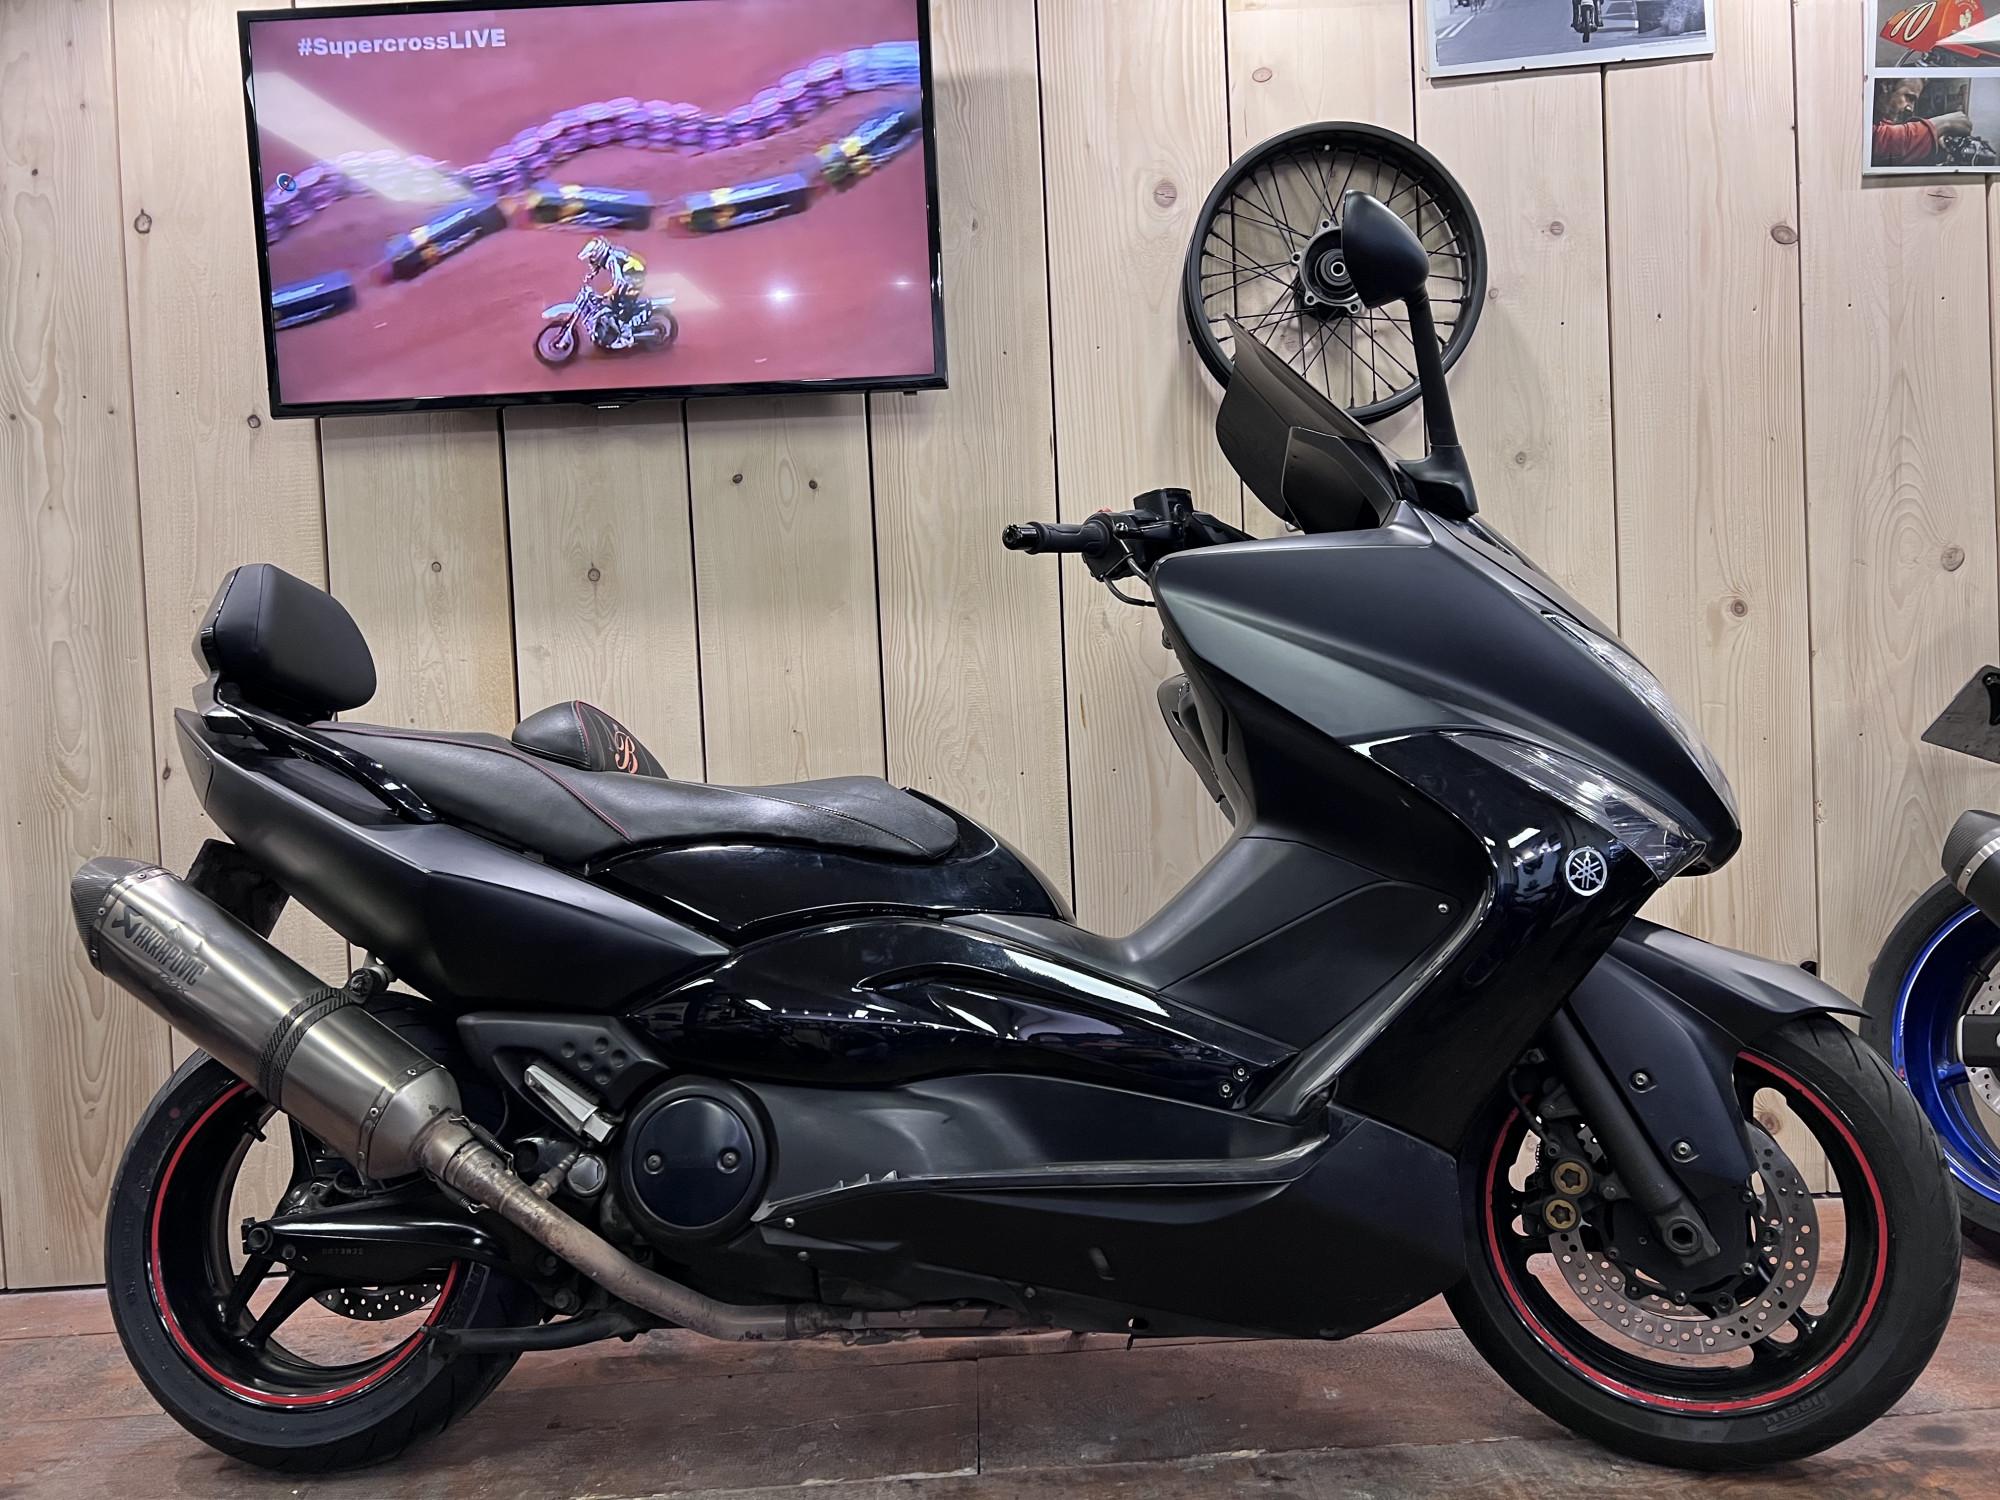 Vendu ! Kawasaki Z 750 R - 4999€ : à découvrir chez Chambourcy Motos 78